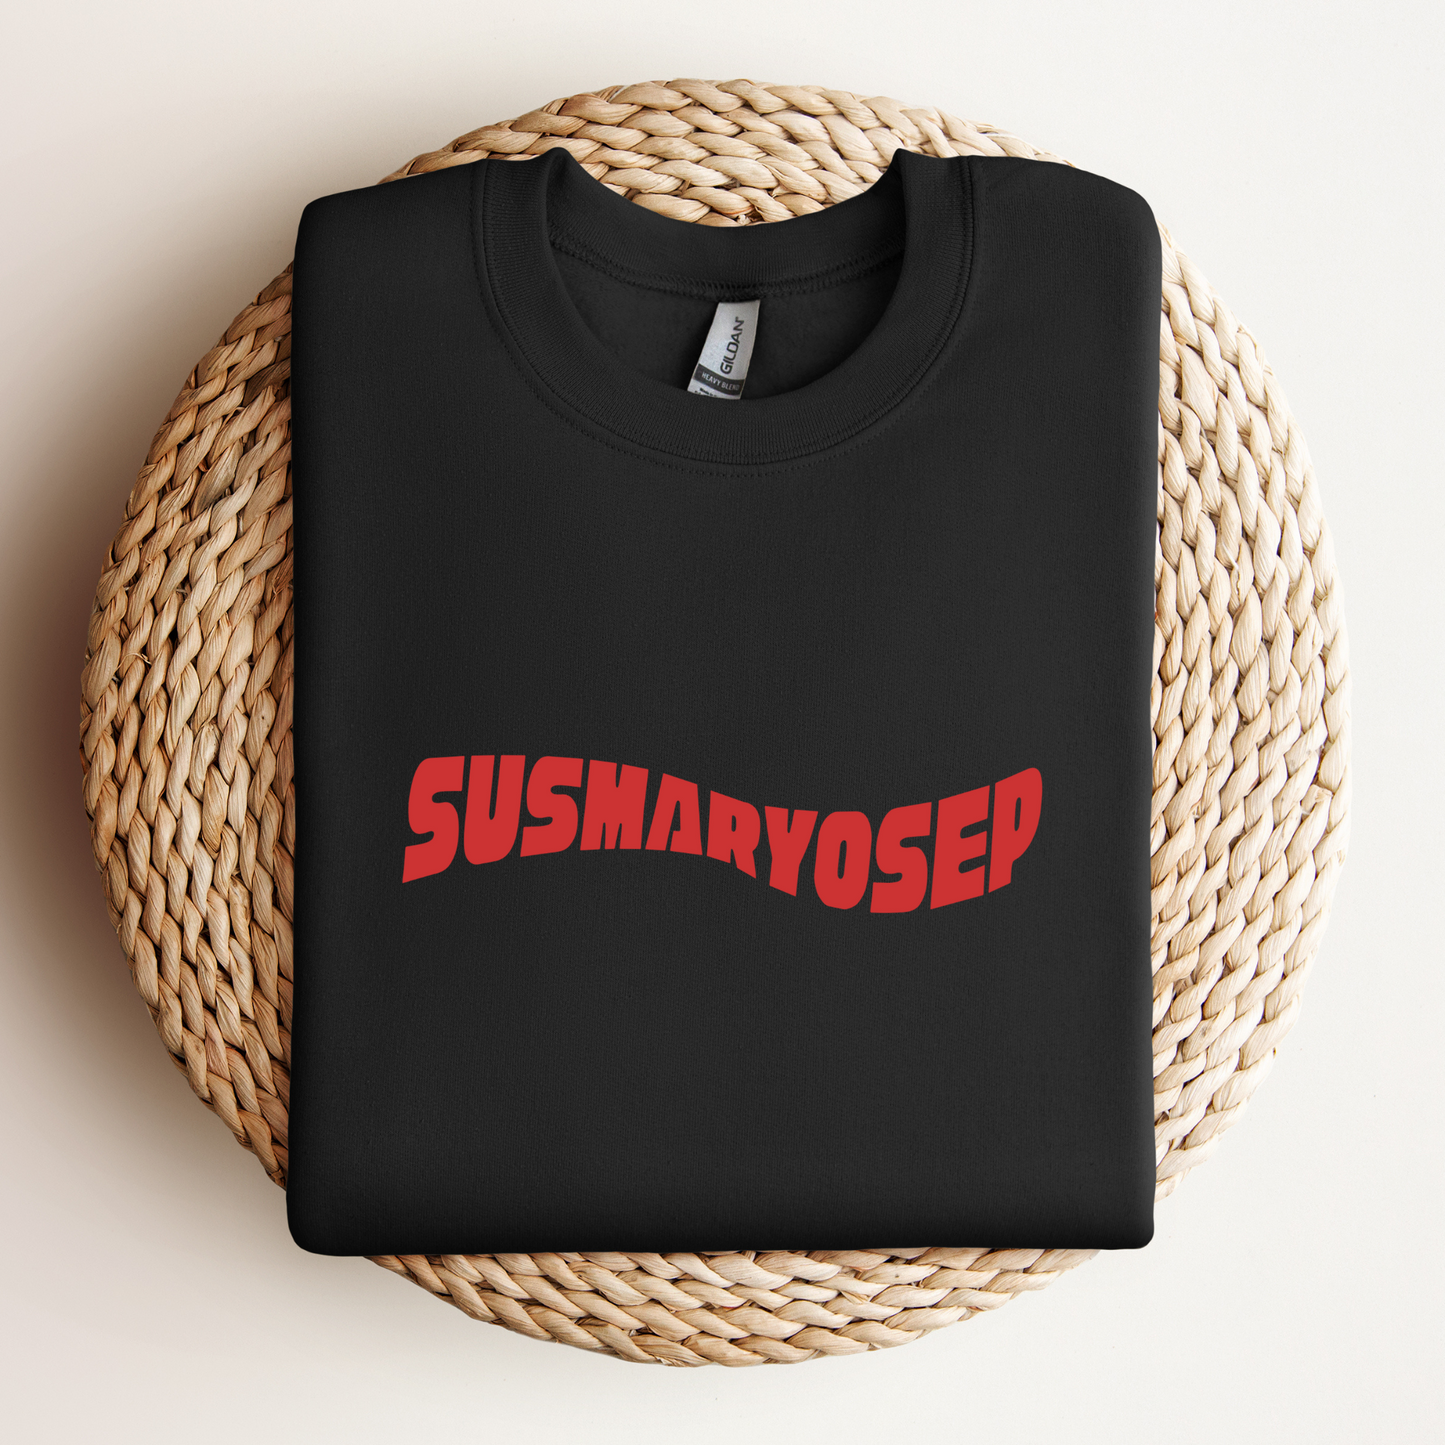 Filipino Sweatshirt Susmaryosep Embroidered Crew Neck Image 2